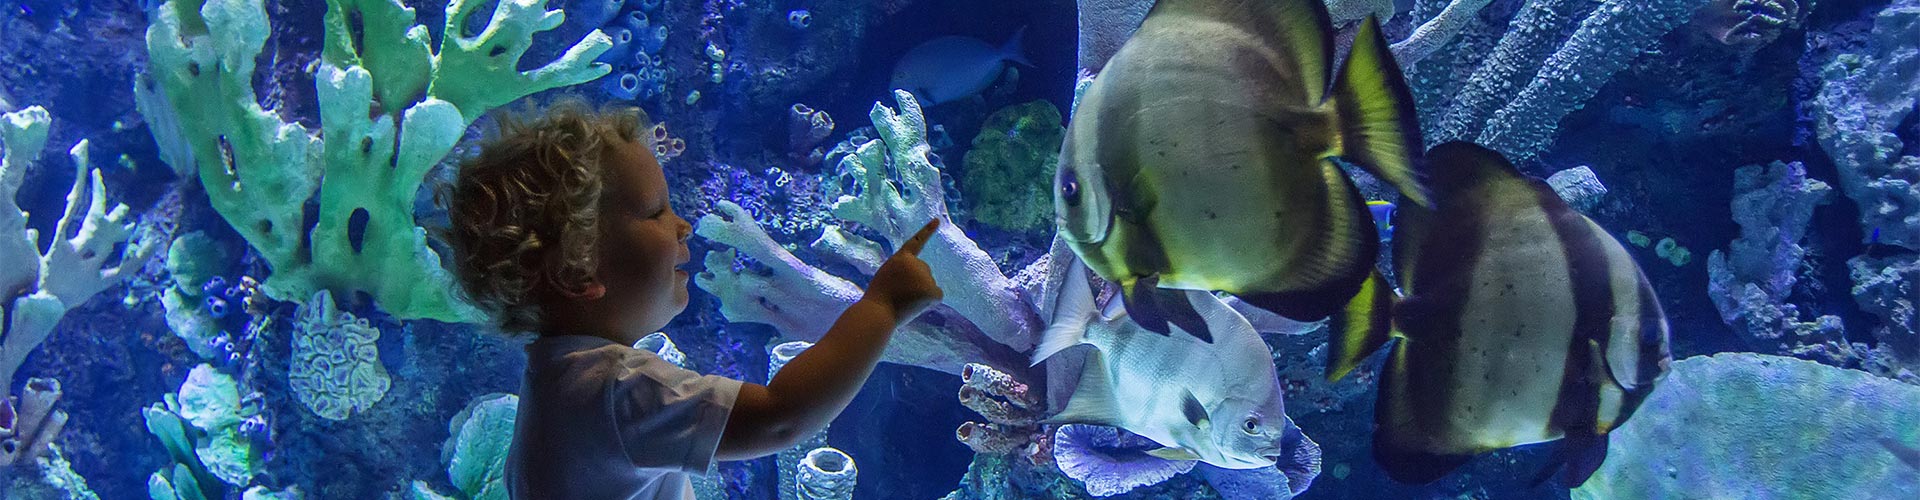 young girl look at a fish in a aquarium 